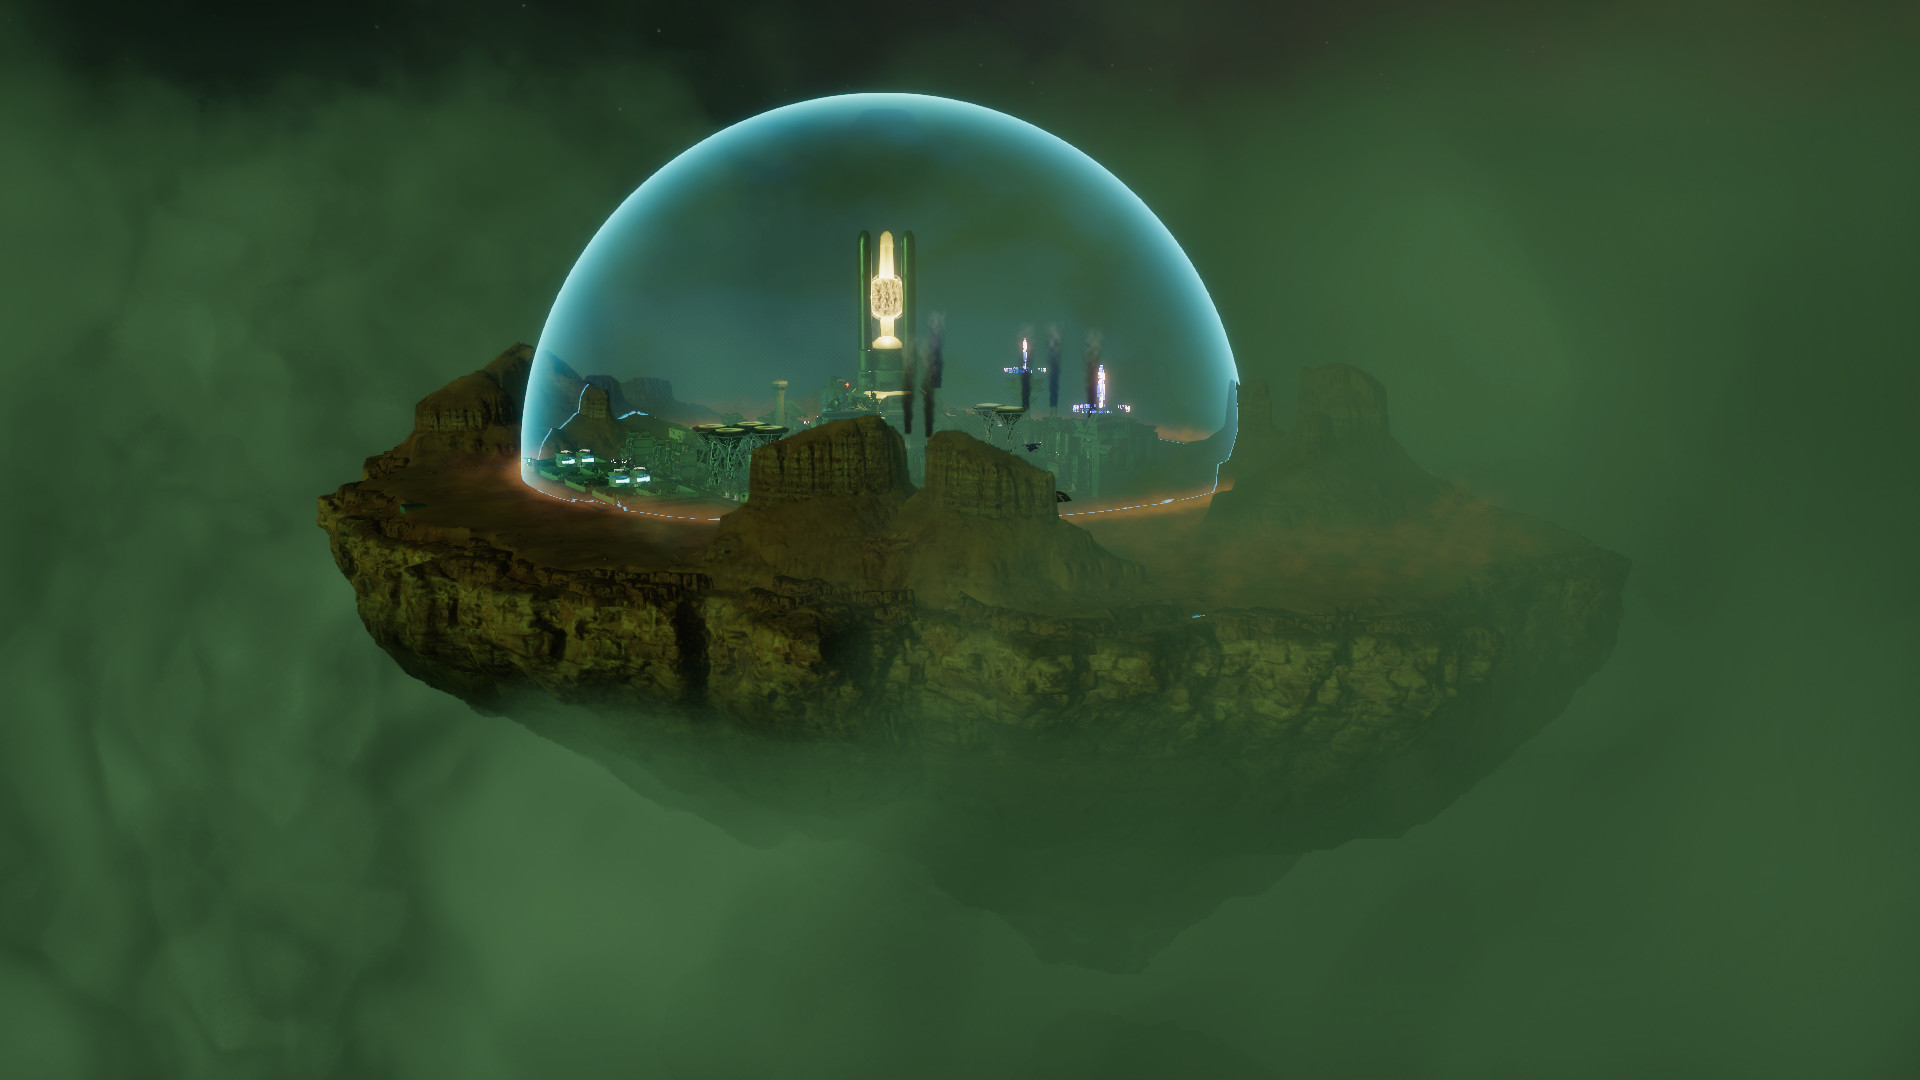 Sphere သည် ရေပေါ်ပူဖောင်းအတွင်း၌ တည်ရှိနေသော သိပ္ပံ-Fi မြို့တည်ဆောက်သူဖြစ်သည်။